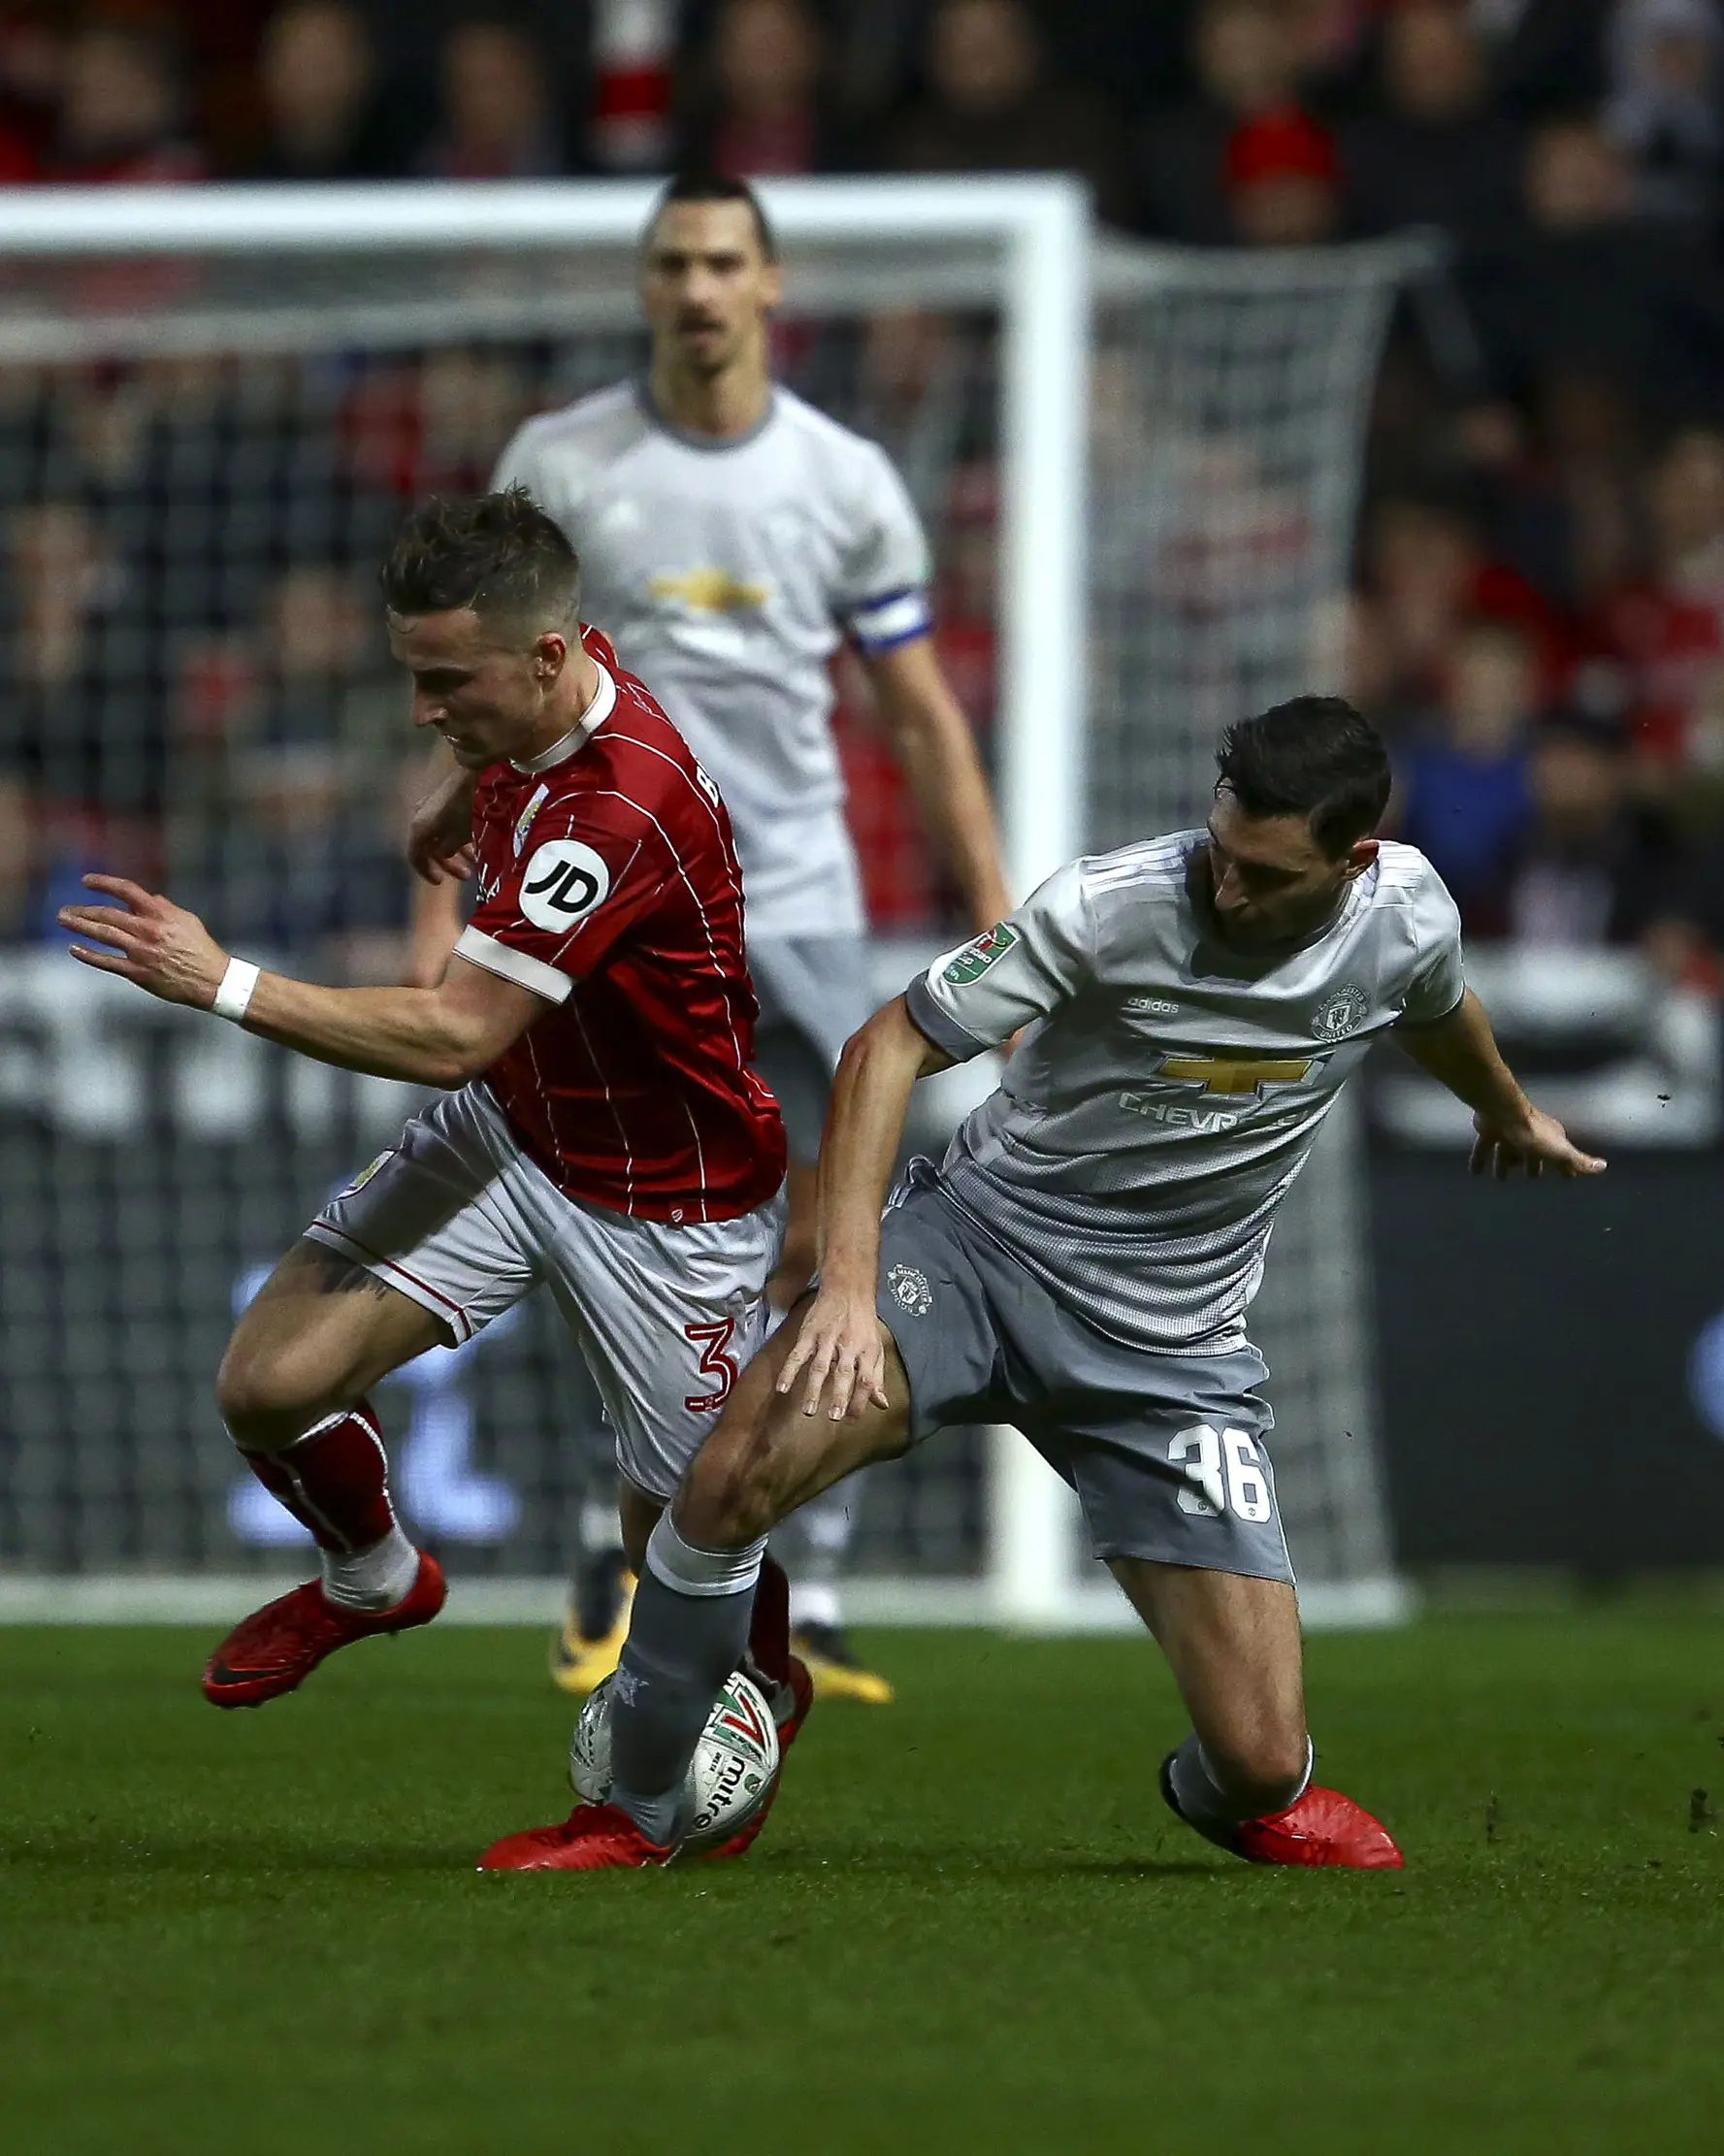 Pemain Bristol City, Joe Bryan berebut bola dengan pemain Manchester United, Matteo Darmian. (Geoff CADDICK / AFP)